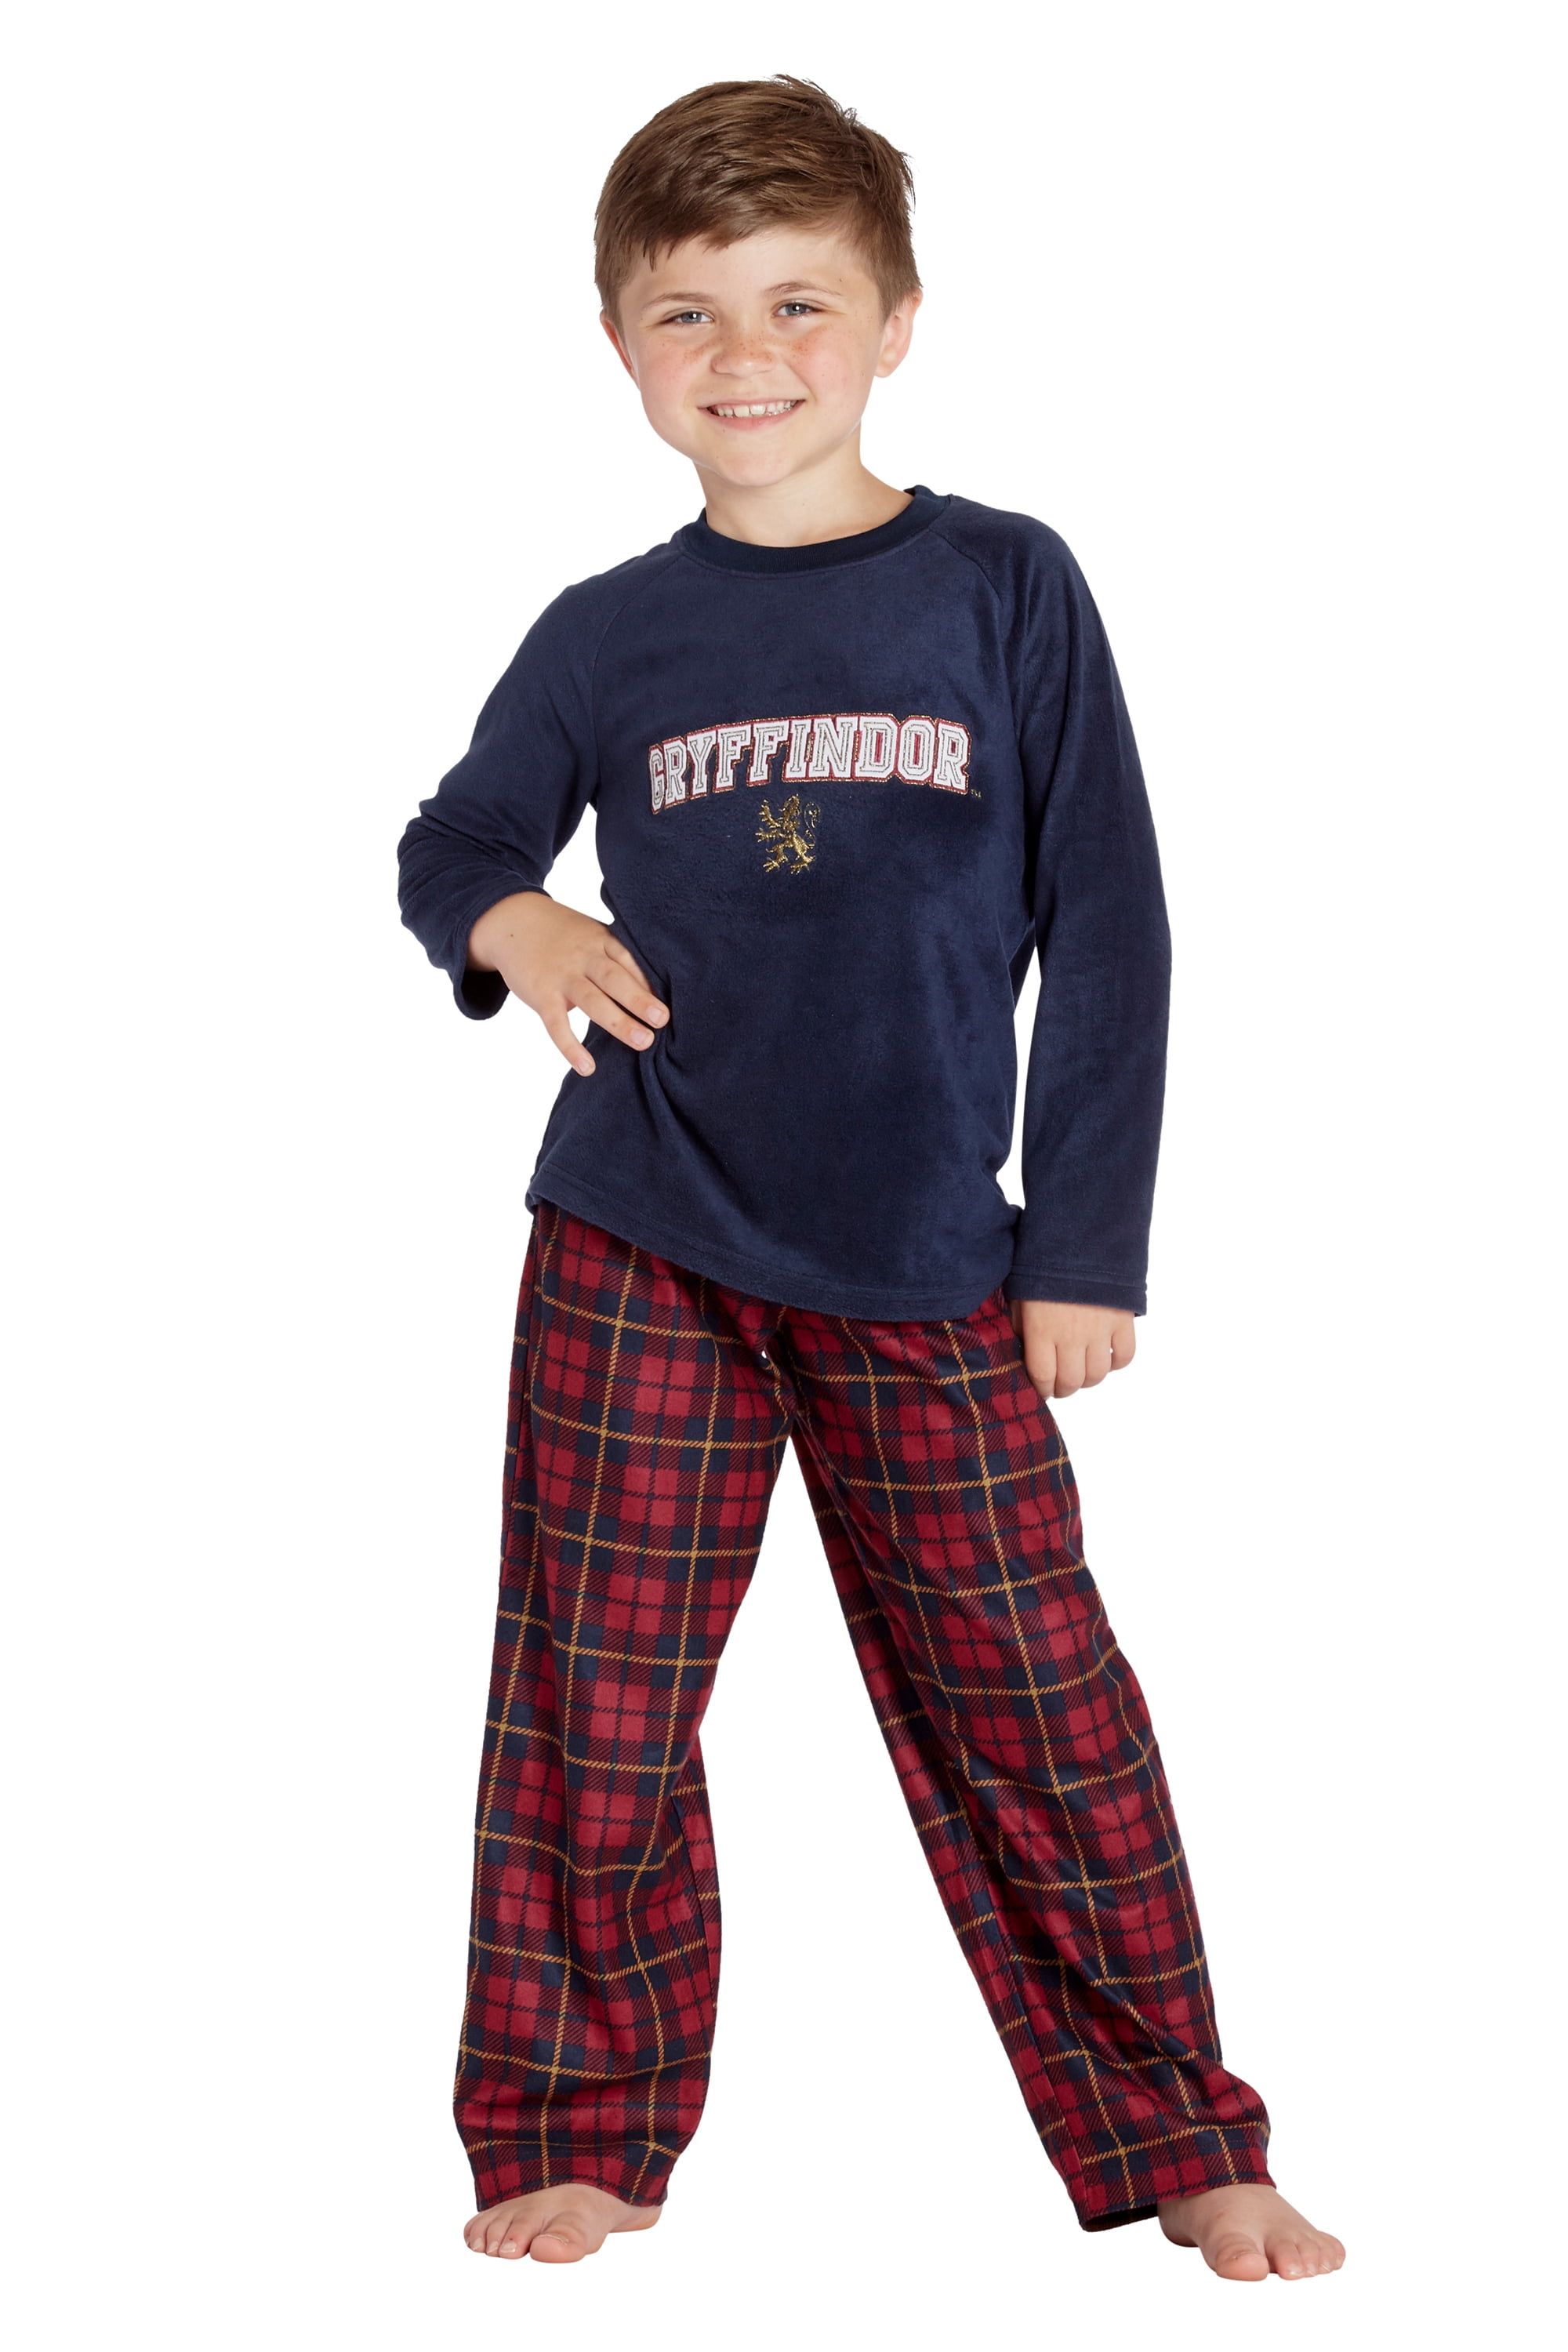 HARRY POTTER Gryffindor Lion Christmas Plush Holiday Toddler Plaid Pajama Set